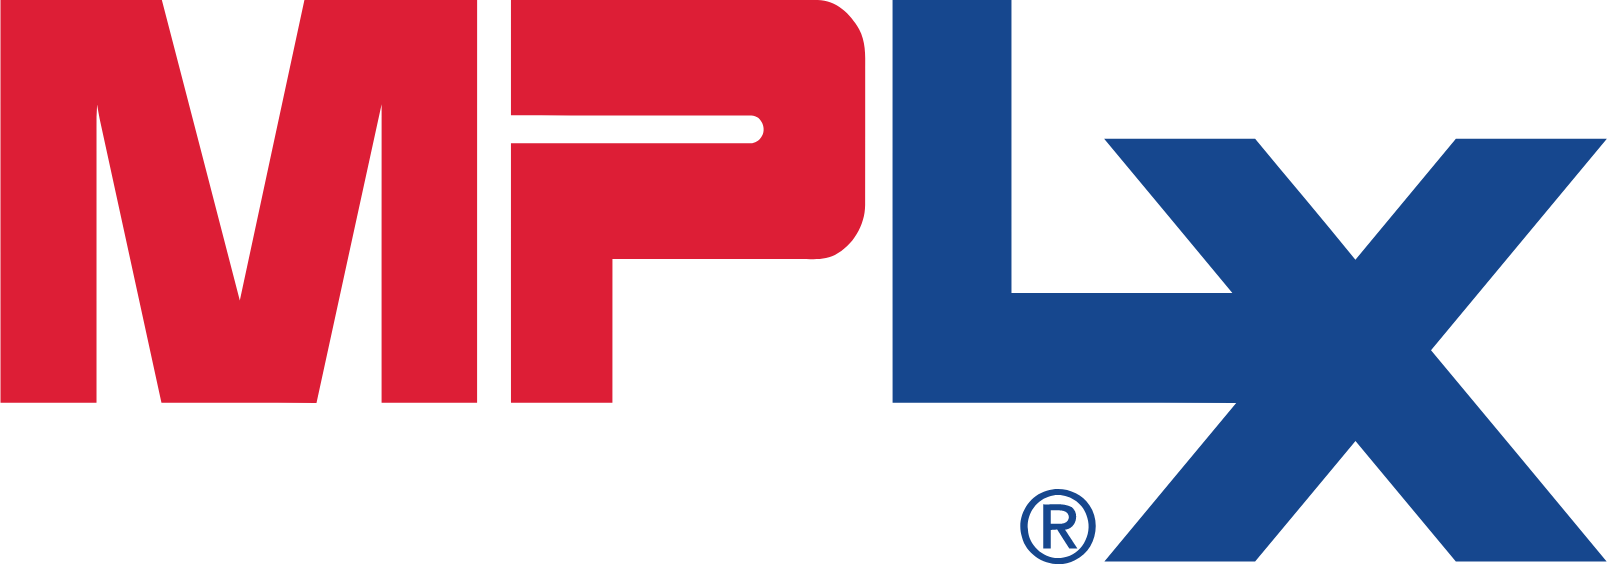 MPLX logo large (transparent PNG)